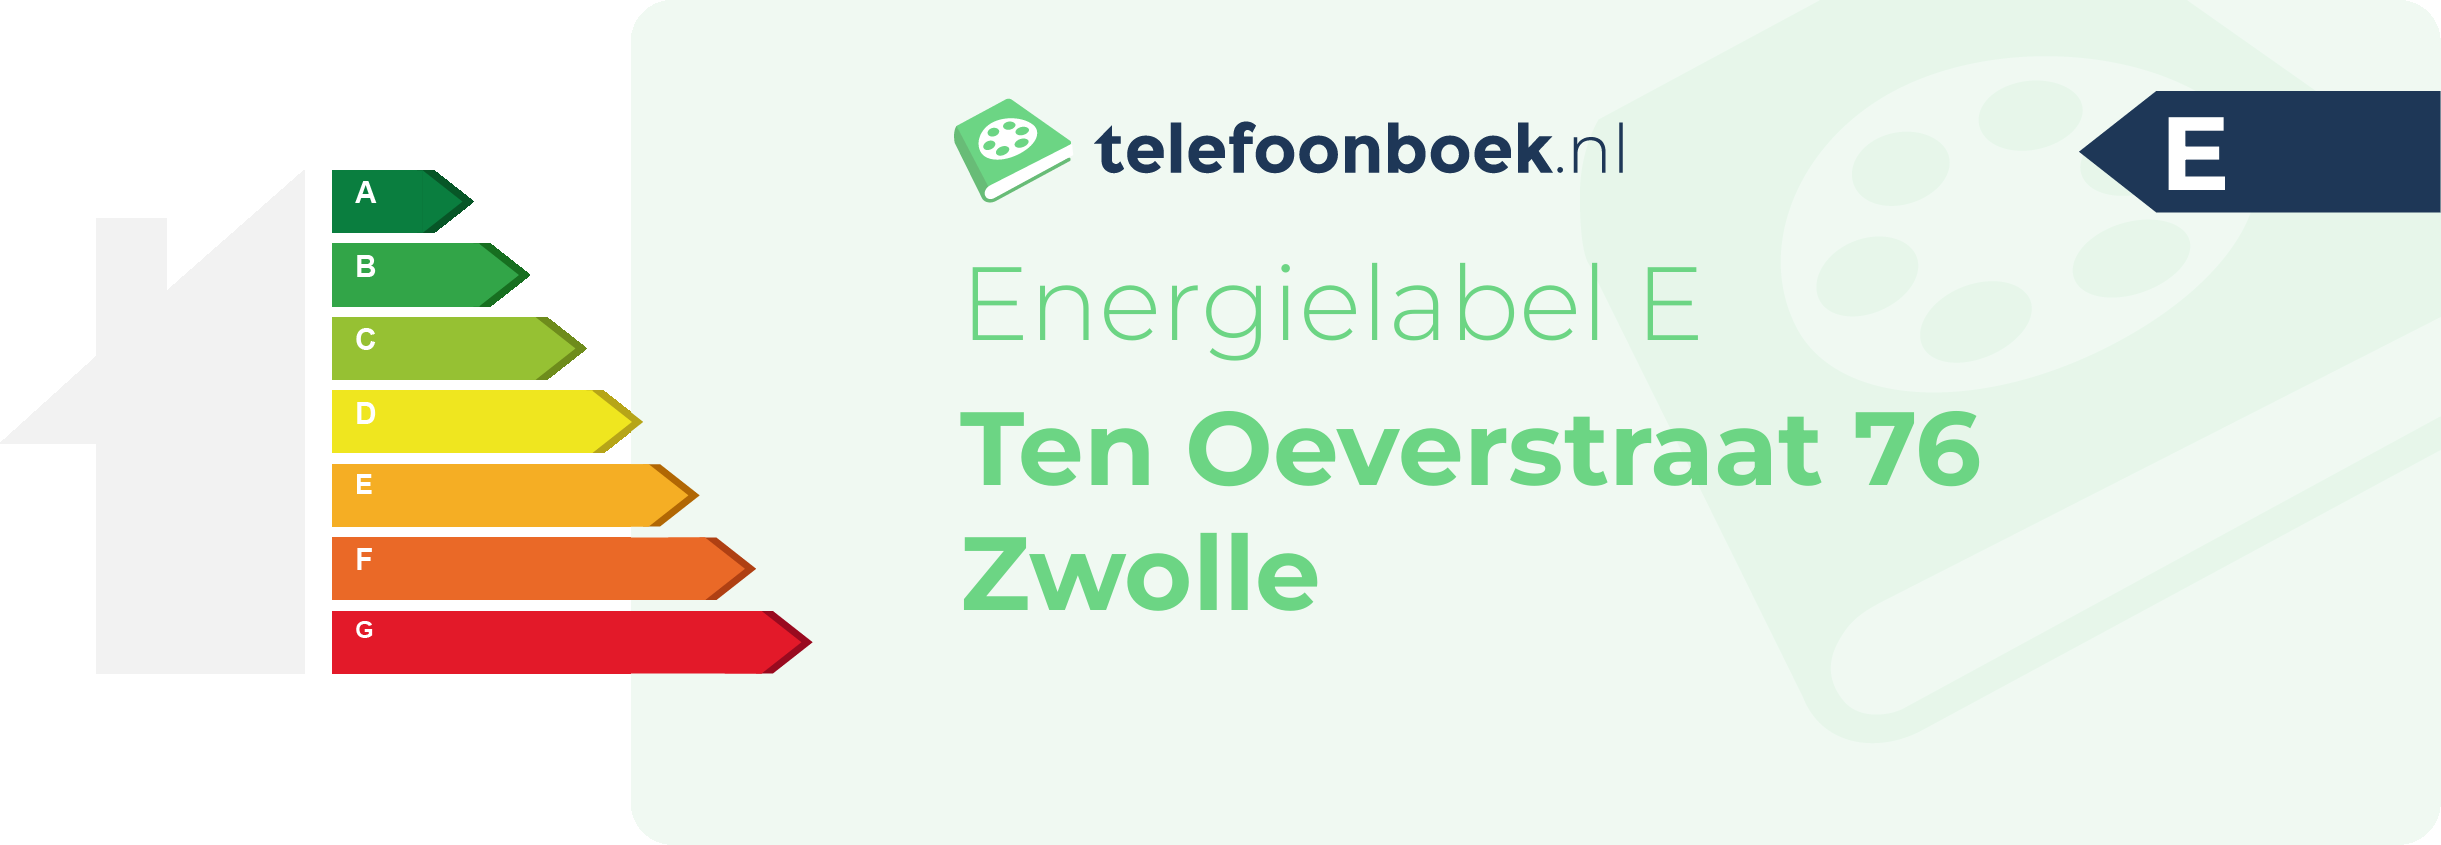 Energielabel Ten Oeverstraat 76 Zwolle